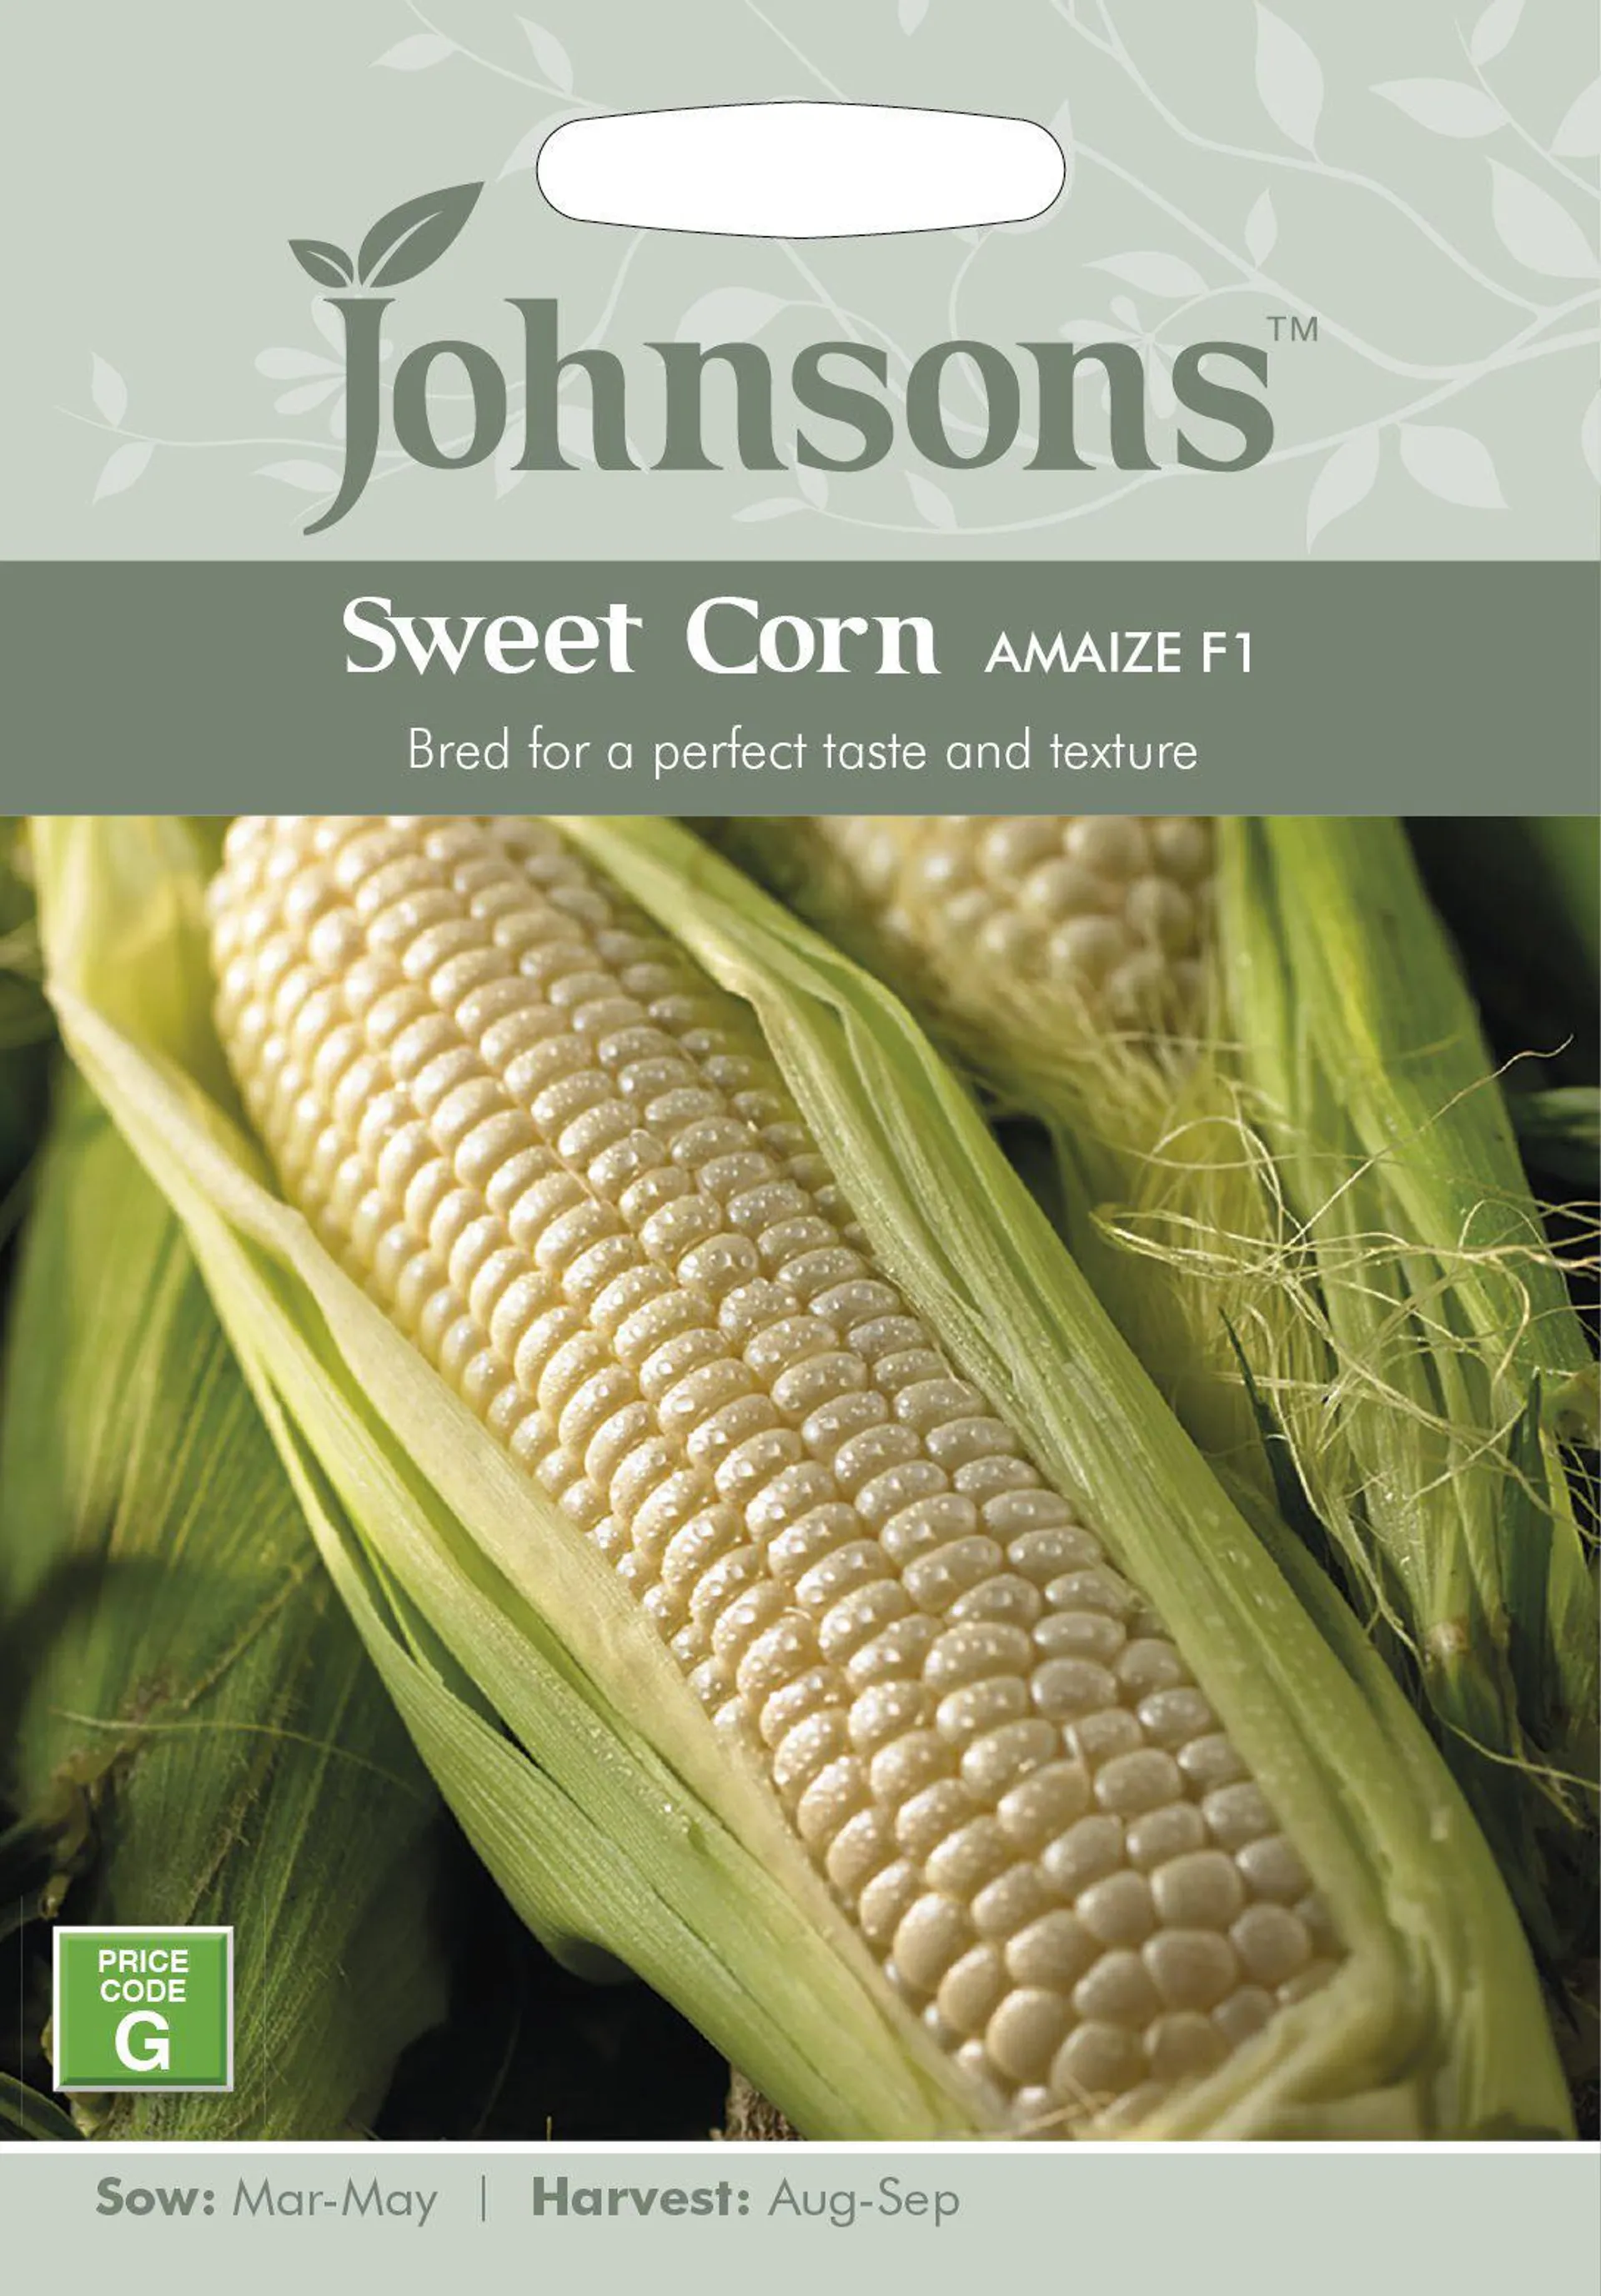 Johnsons Sweet Corn Amaize F1 Seeds